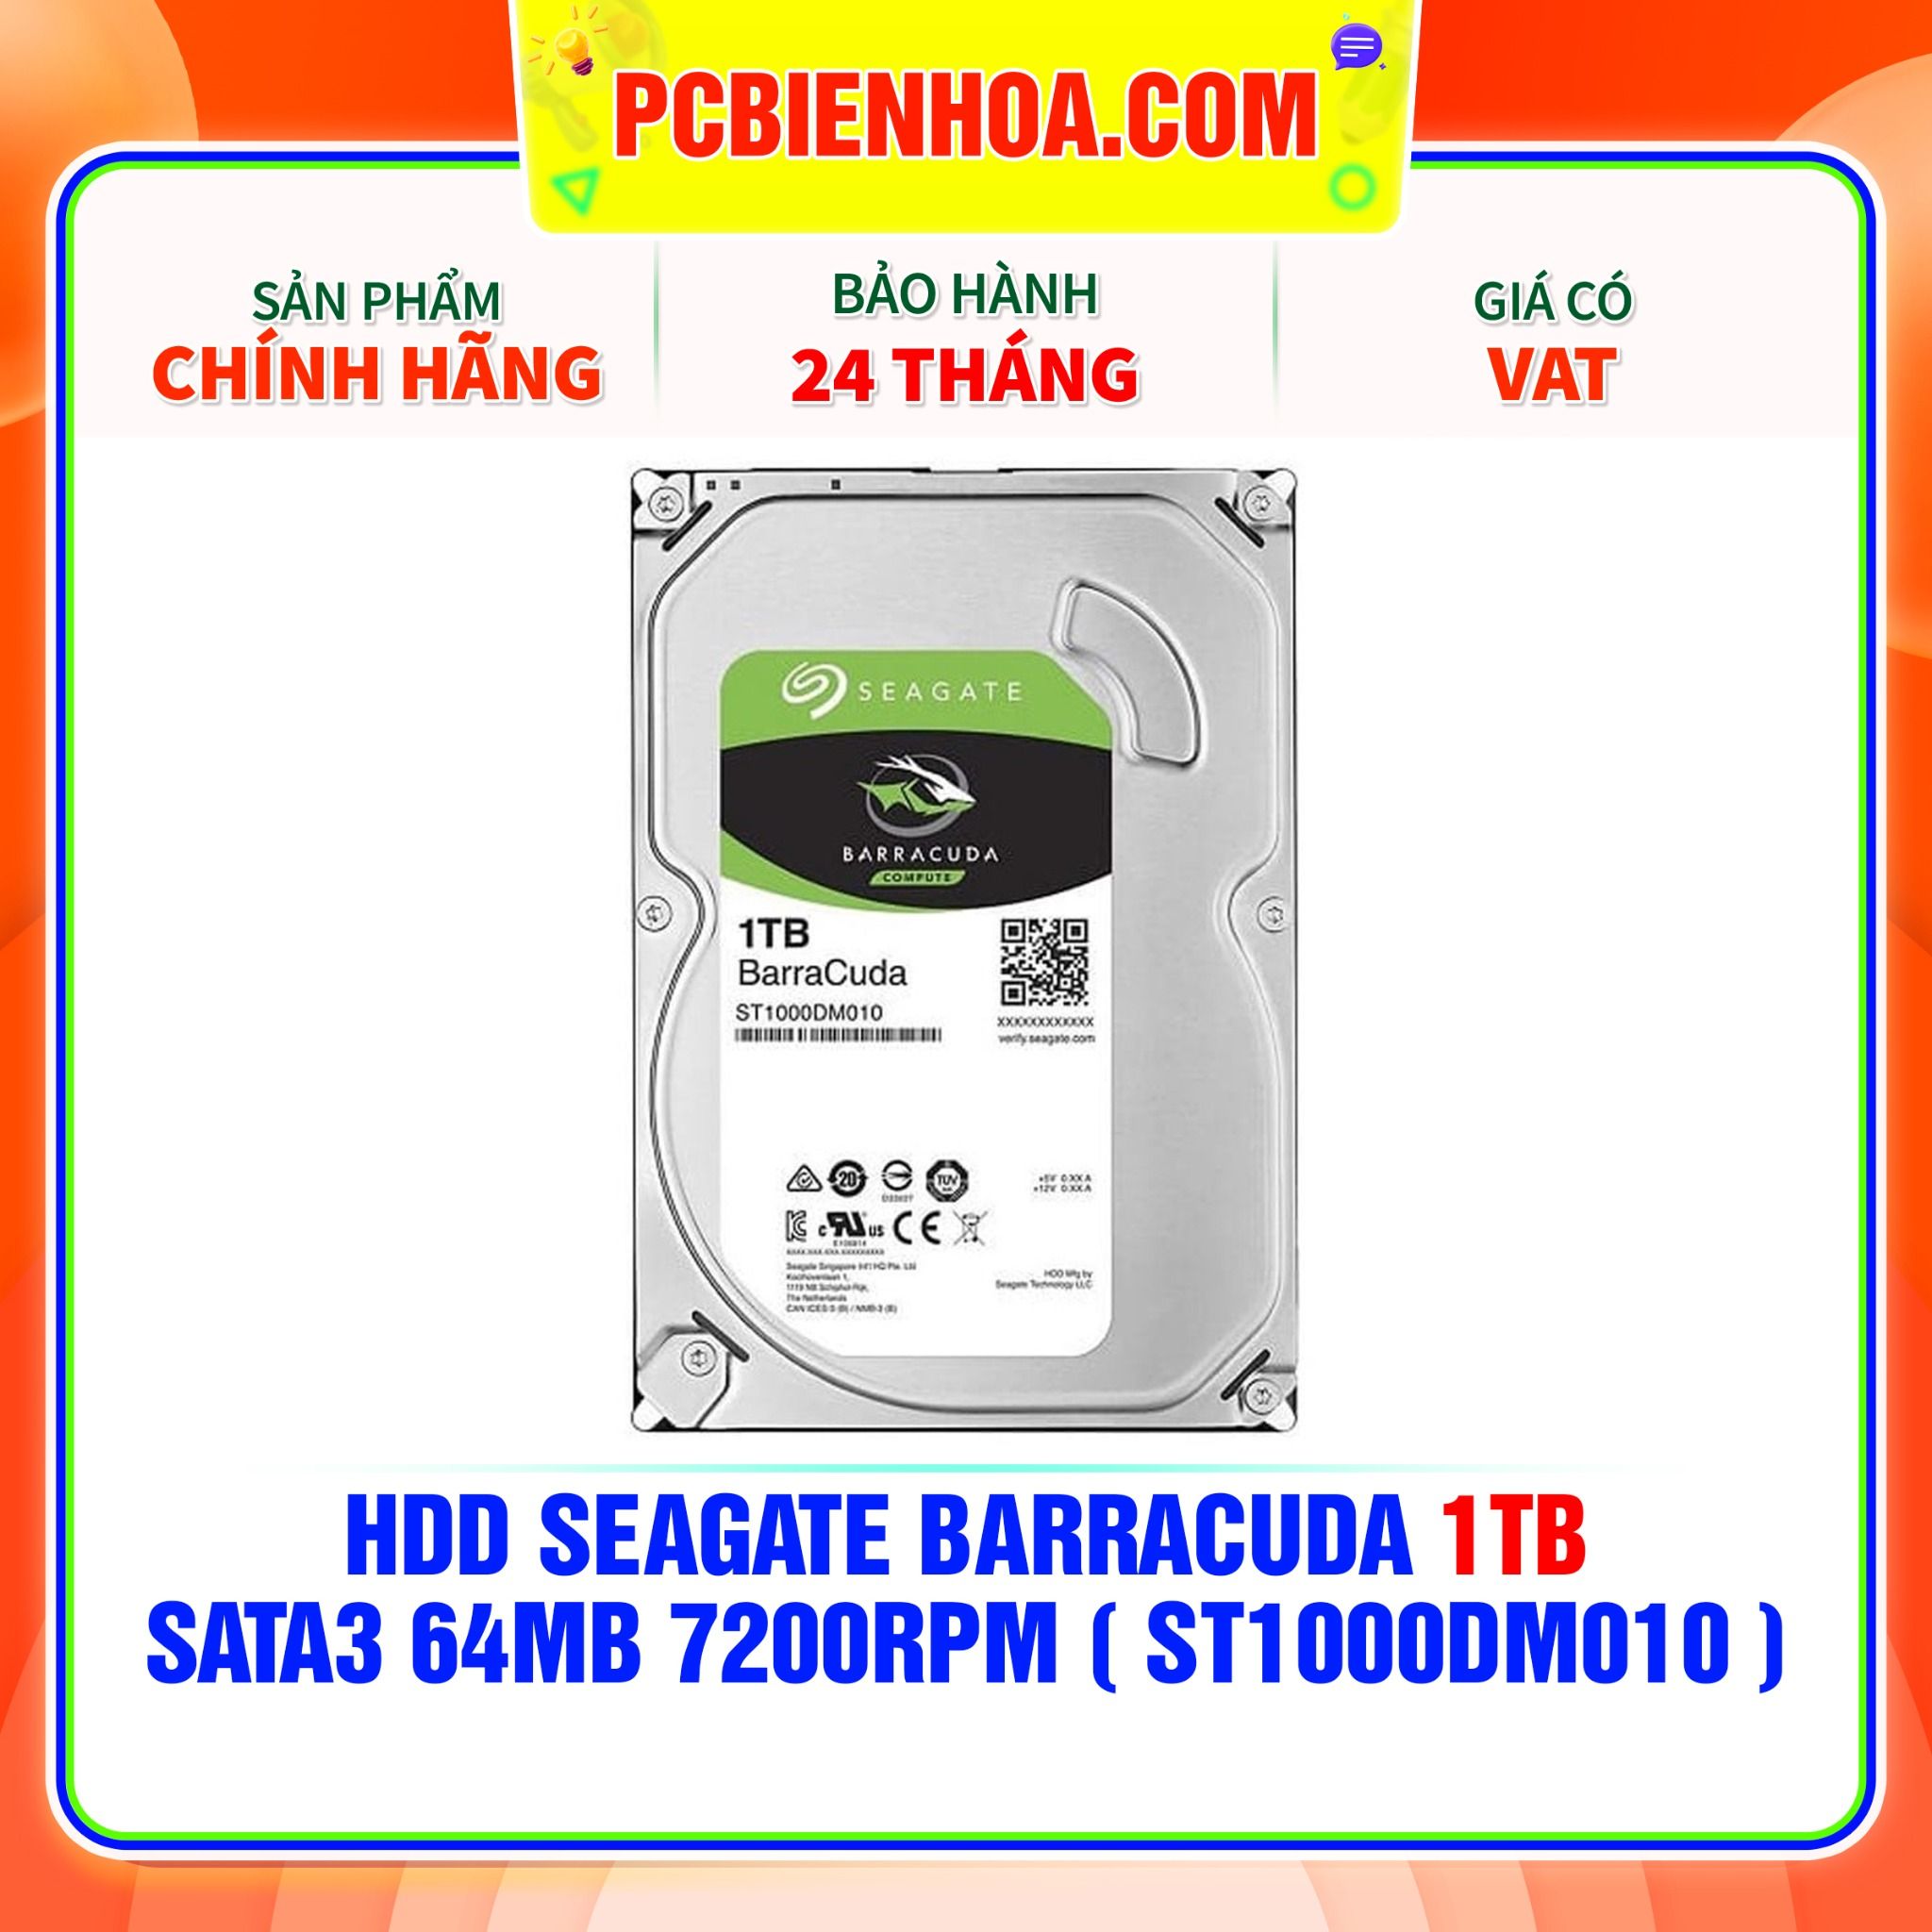  HDD SEAGATE BARRACUDA 1TB - SATA3 64MB 7200RPM ( ST1000DM010 ) 